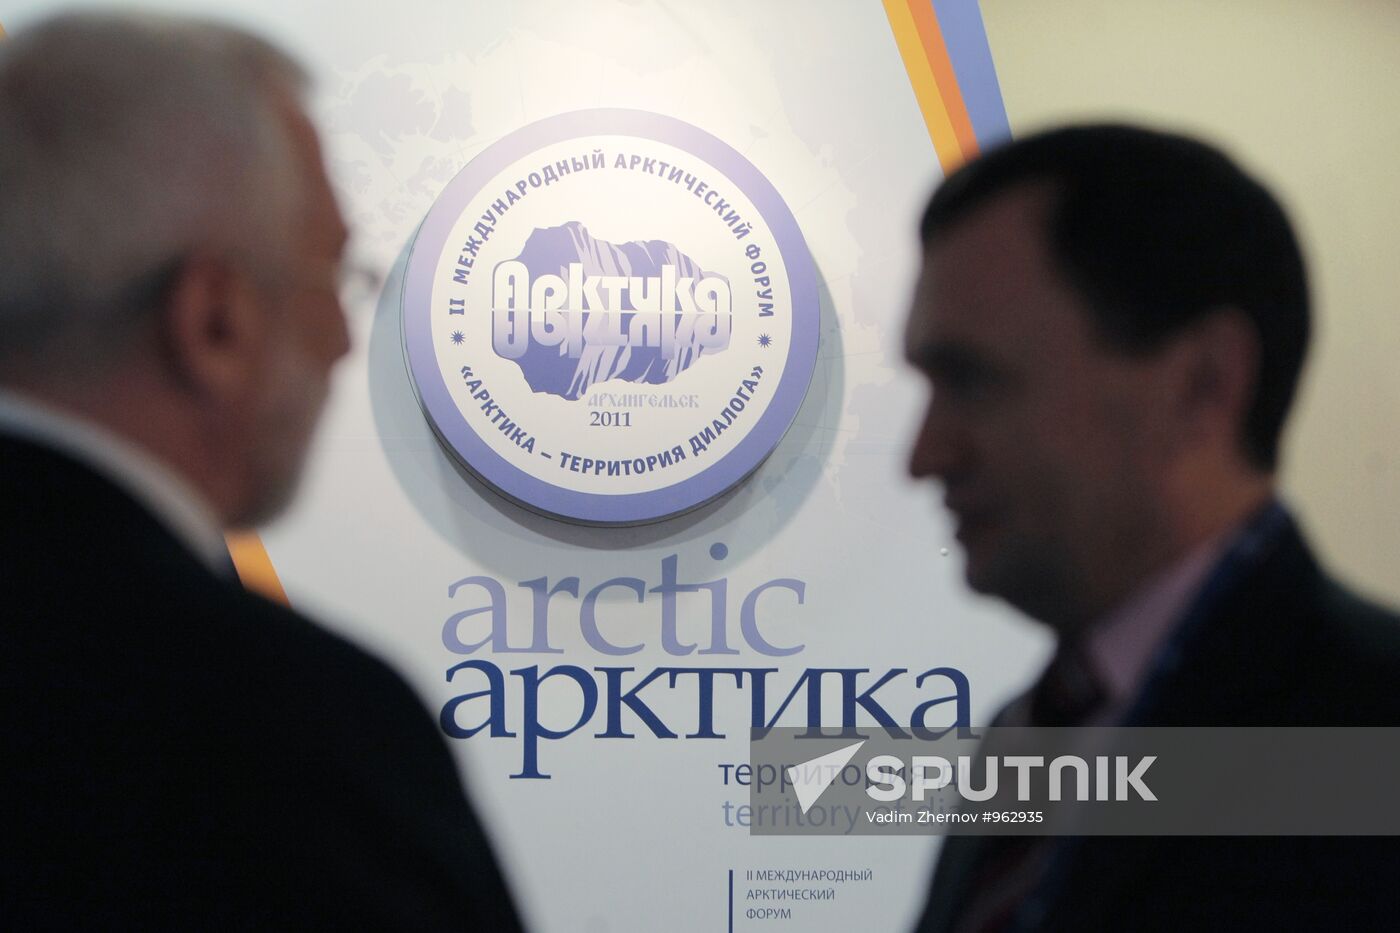 The Arctic: Territory of Dialogue international forum